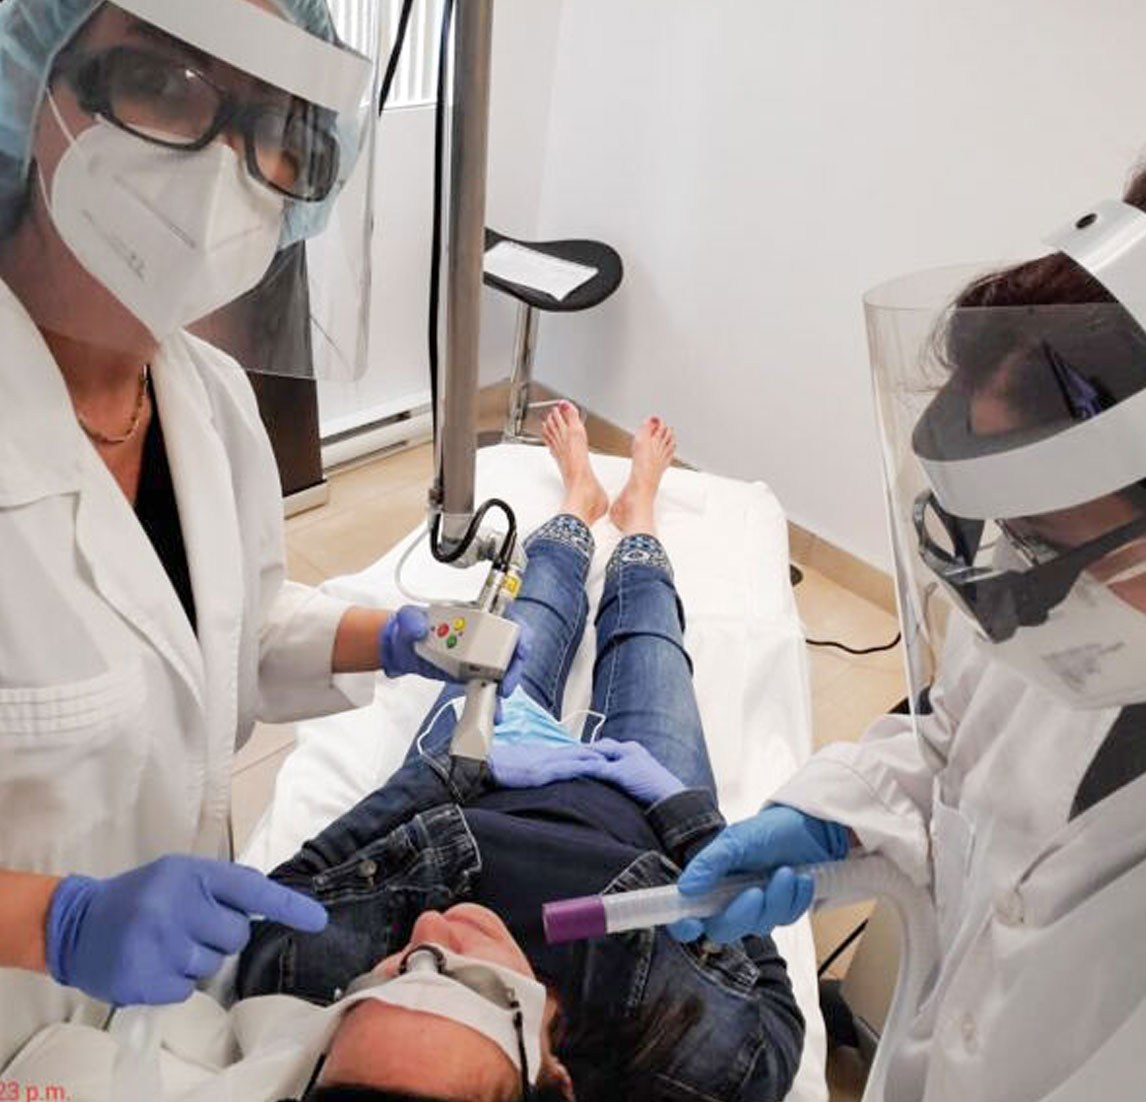 Technicians performing smartskin laser treatment on patient